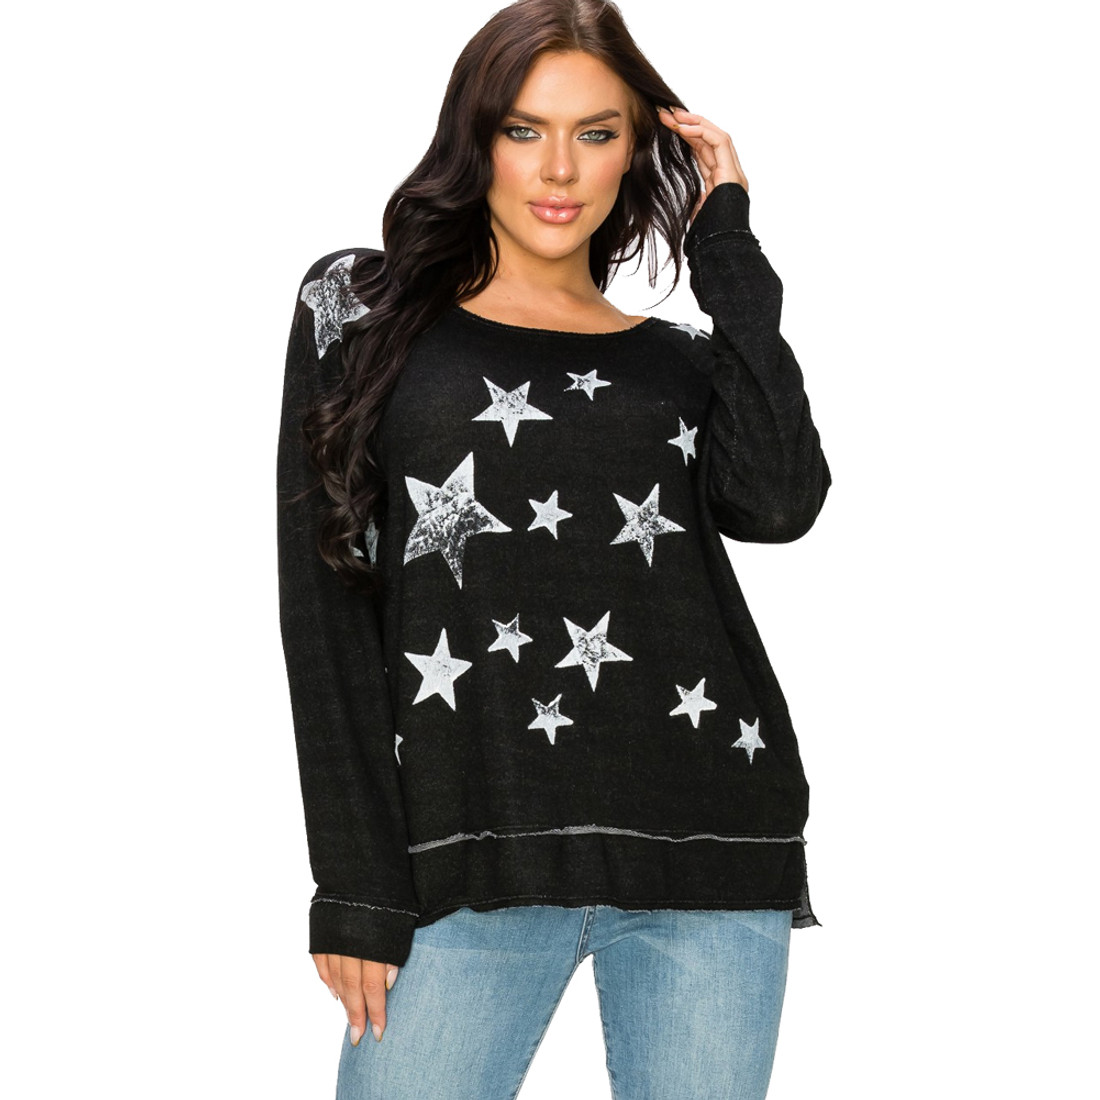 T-Party Star Print Lightweight Sweatshirt Top